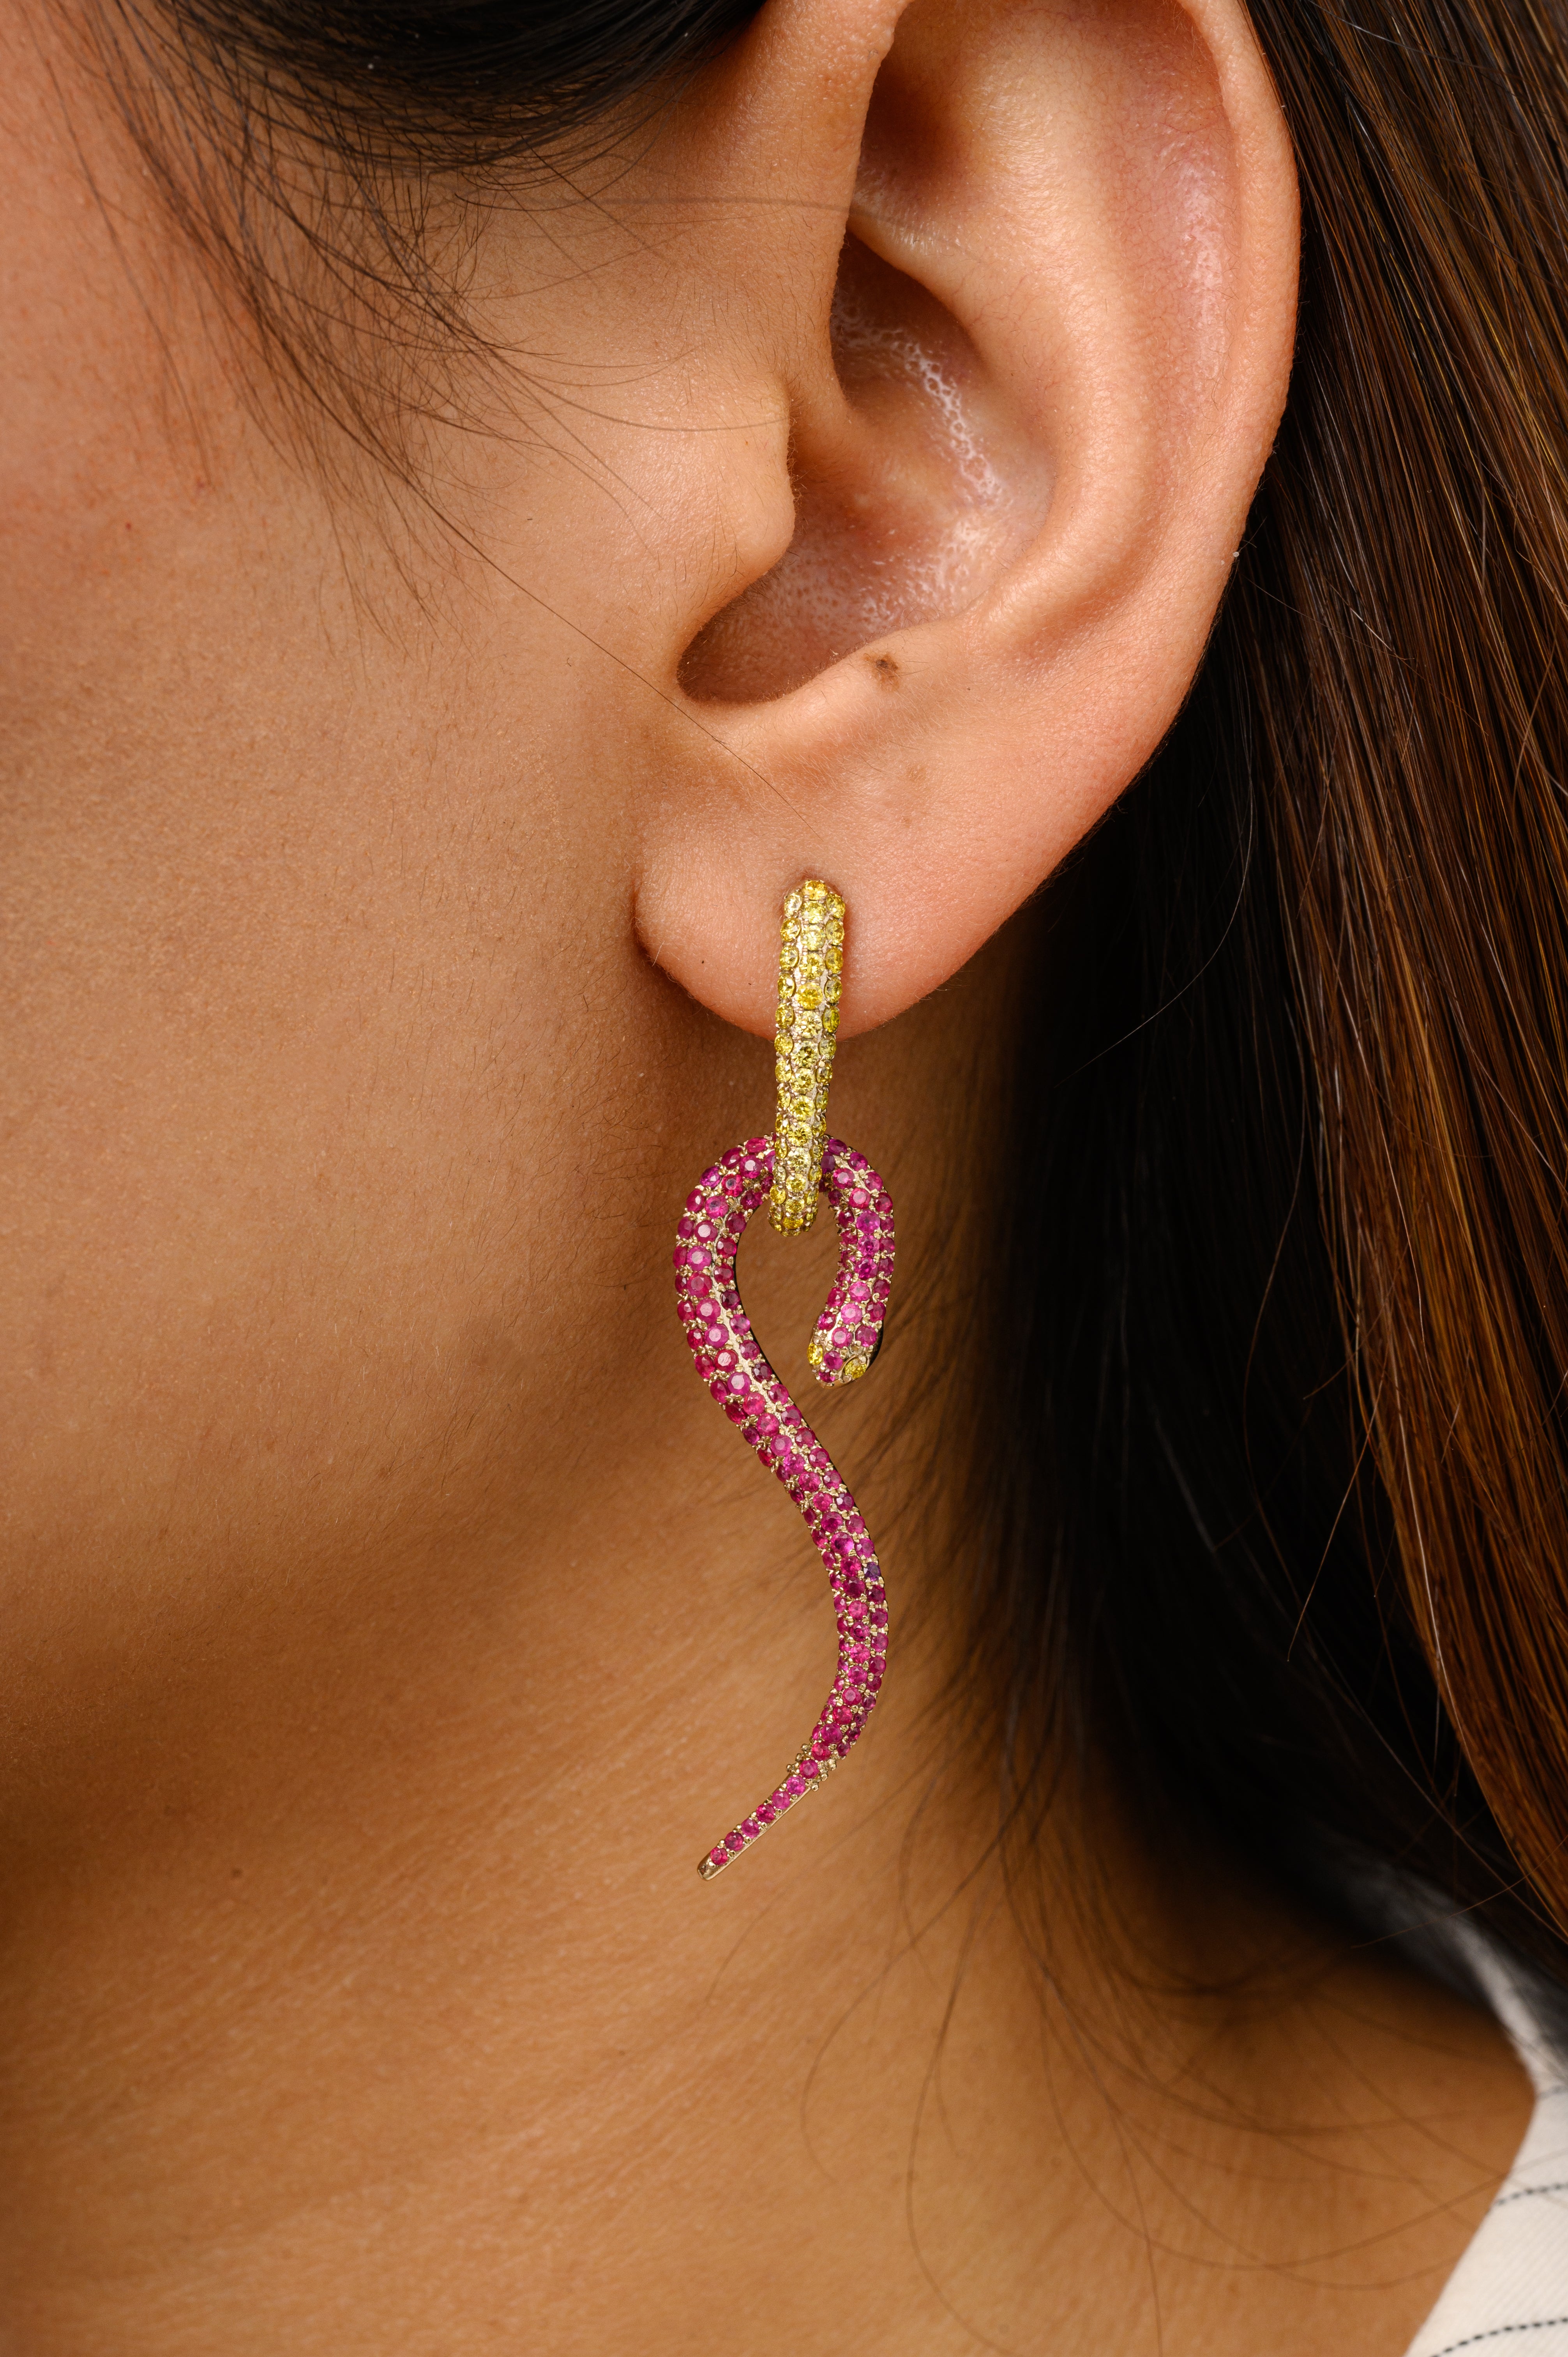 18K Solid Yellow Gold Ruby Diamond Serpentine Earrings